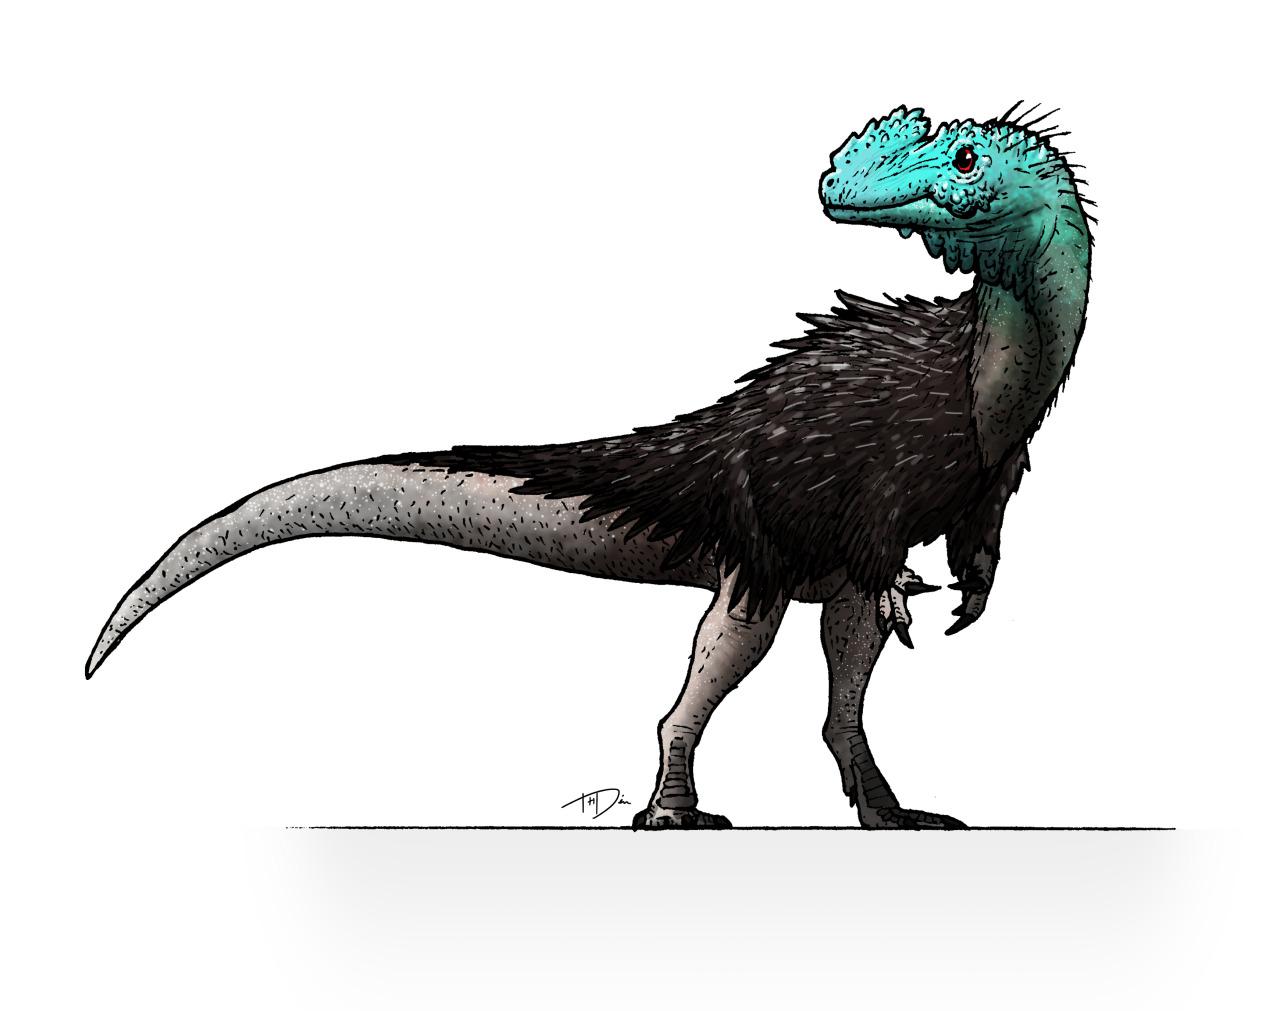 Tonouchisaurus, Cretaceous
(Меловой период)